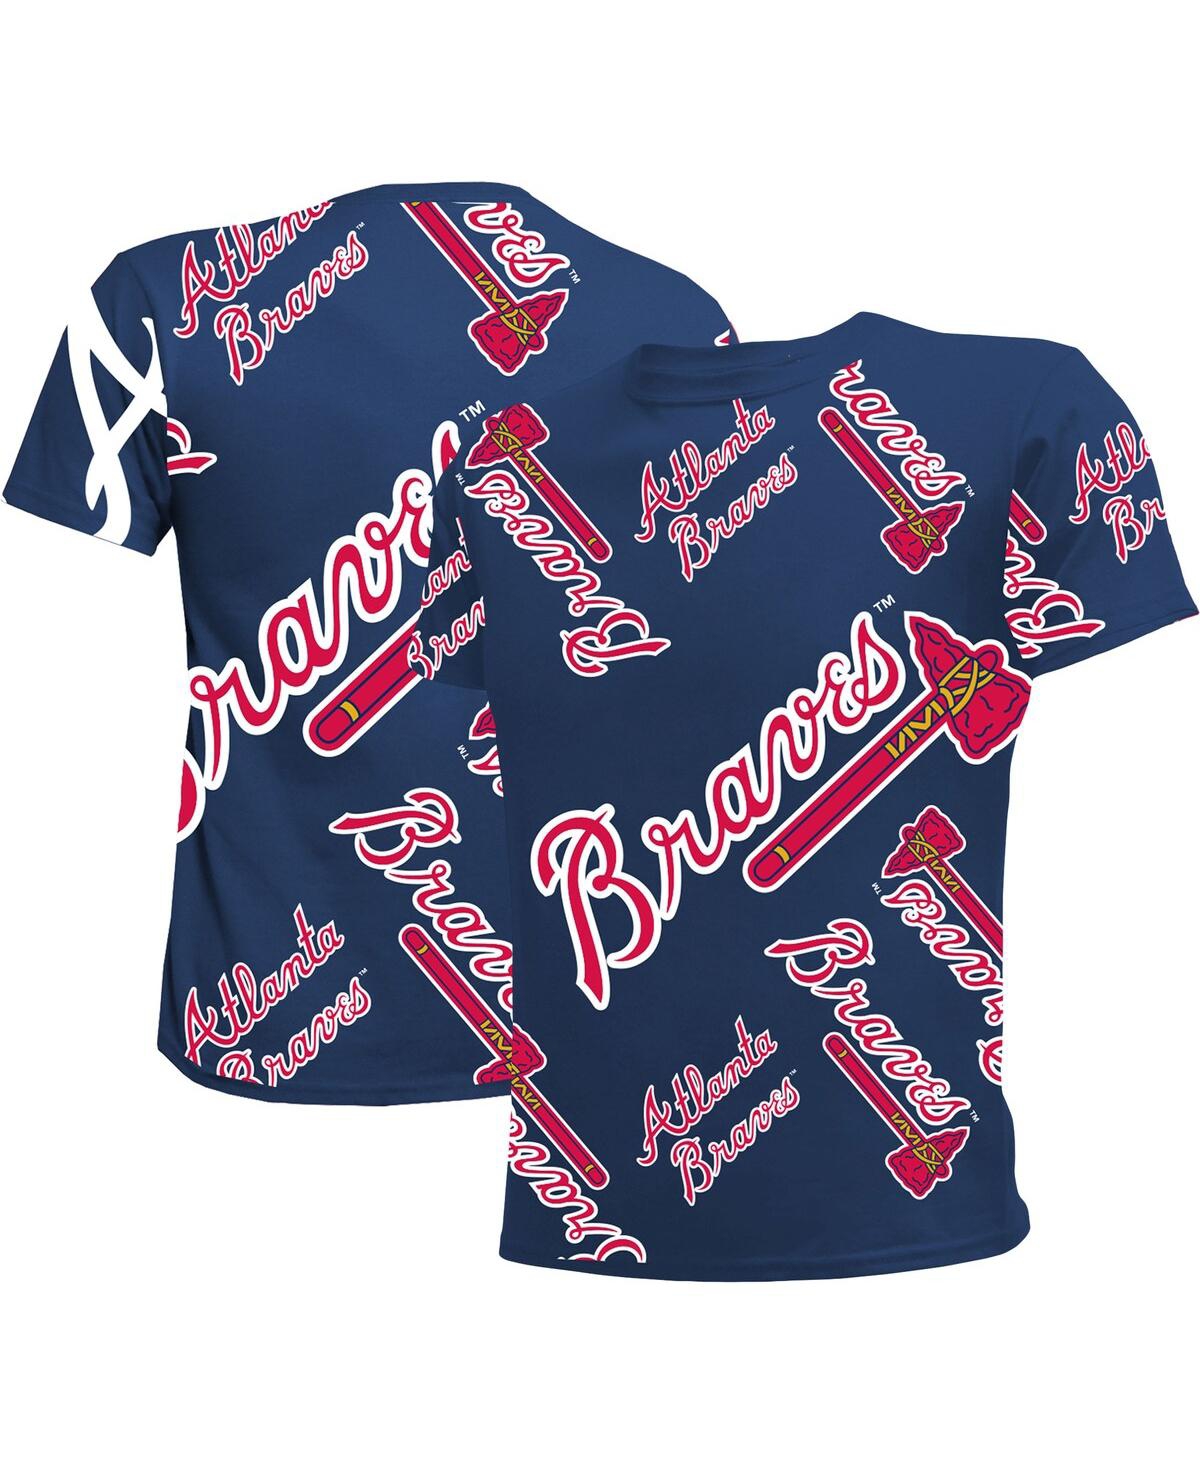 Boys Atlanta Braves Sports Fan Shirts for sale